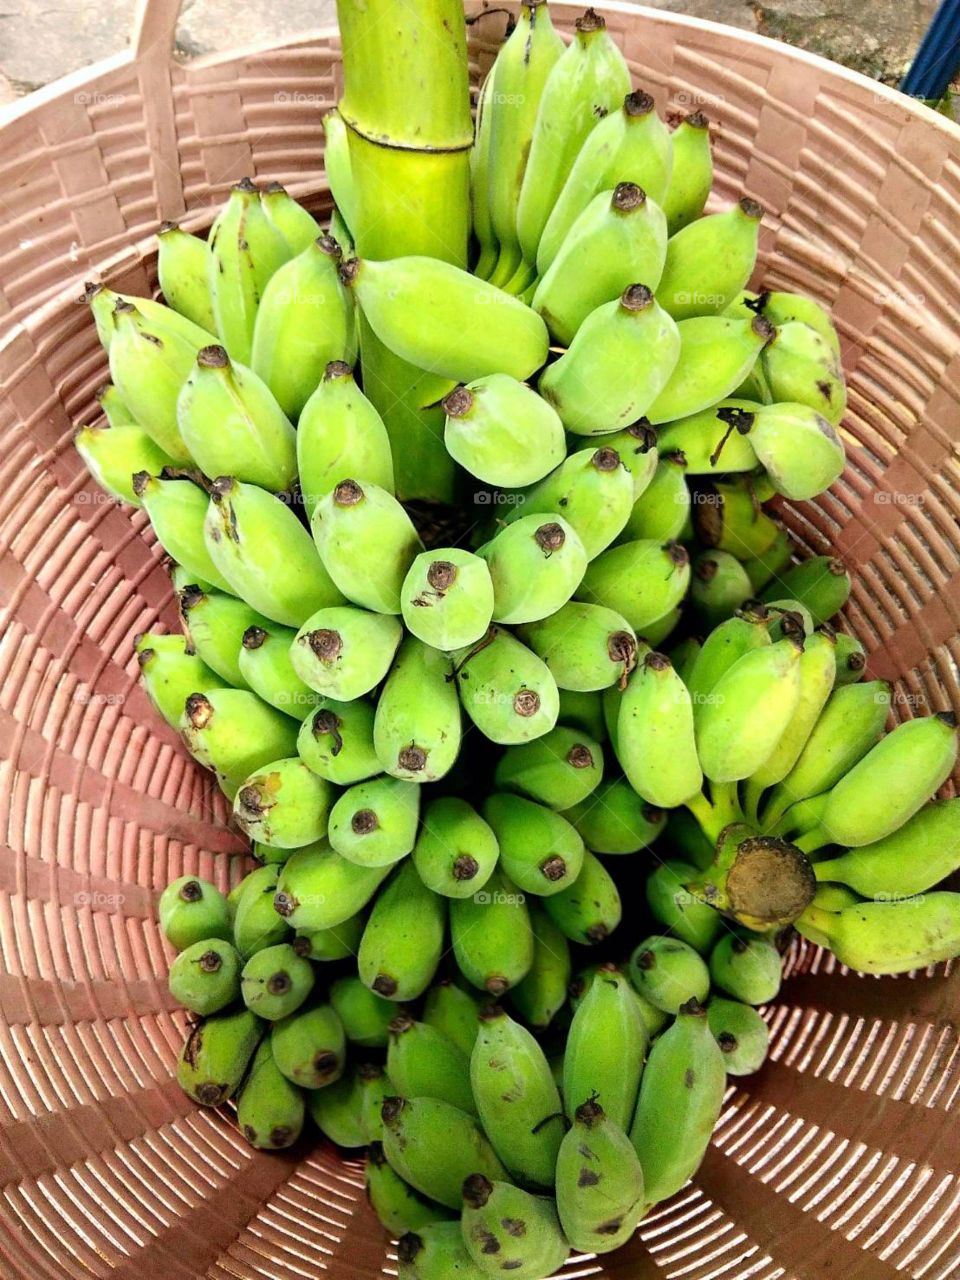 Green Banana in the basket for sale at JJ market, Thailand.